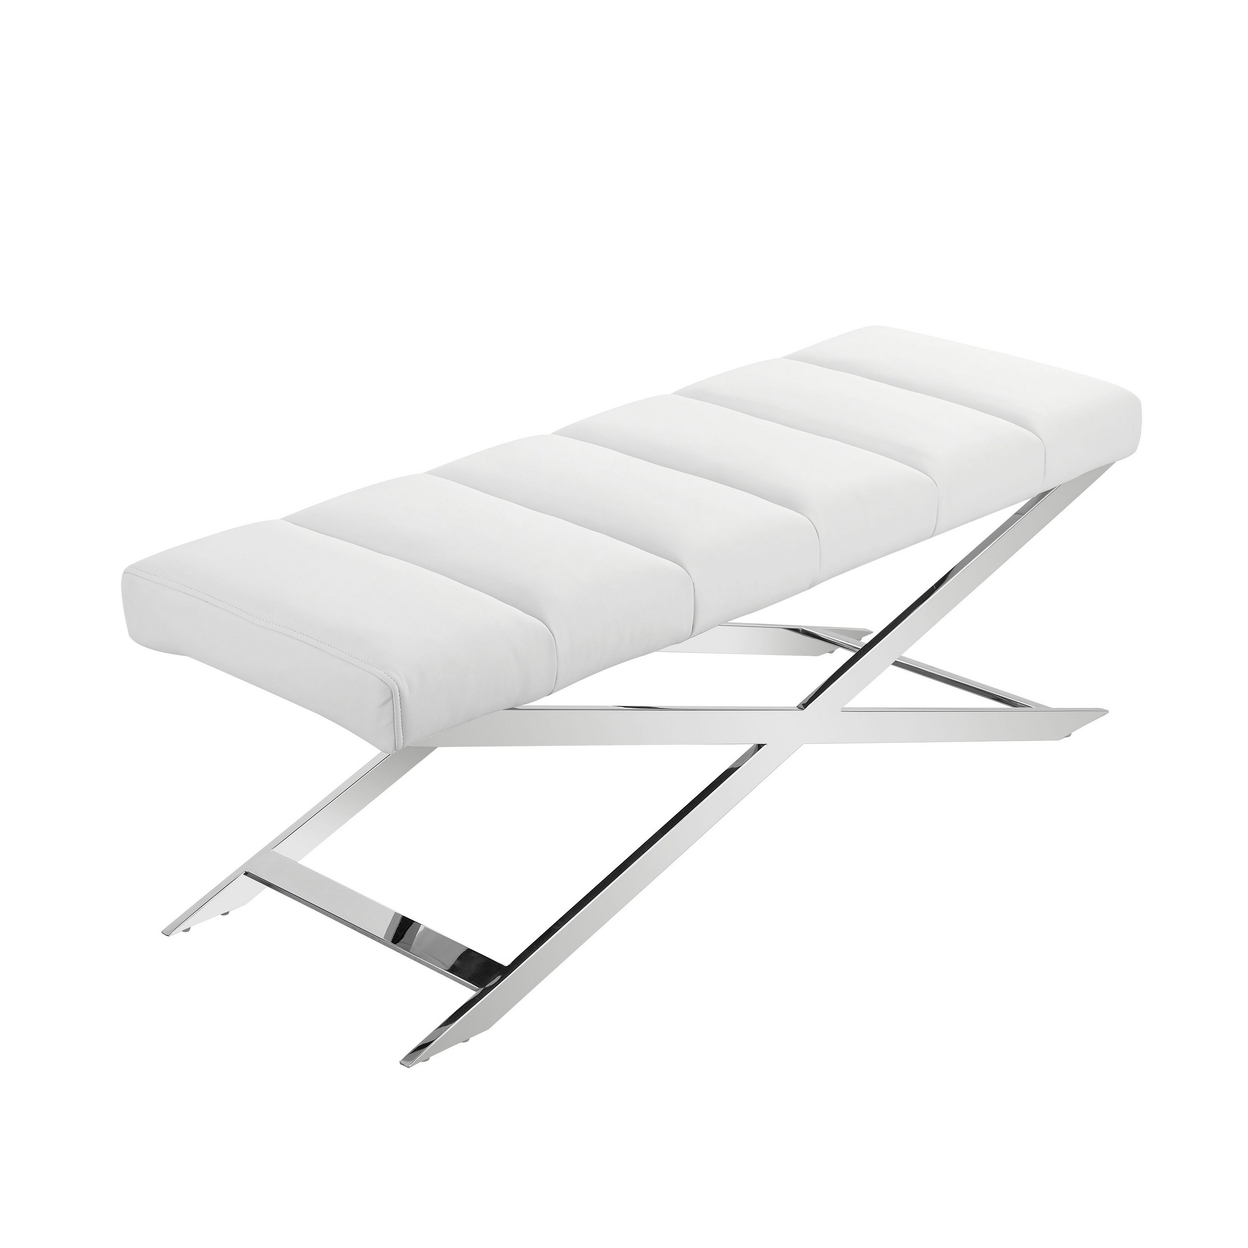 47 Inch Tufted Modern Bench, White Faux Leather, Cross Design Silver Base- Saltoro Sherpi